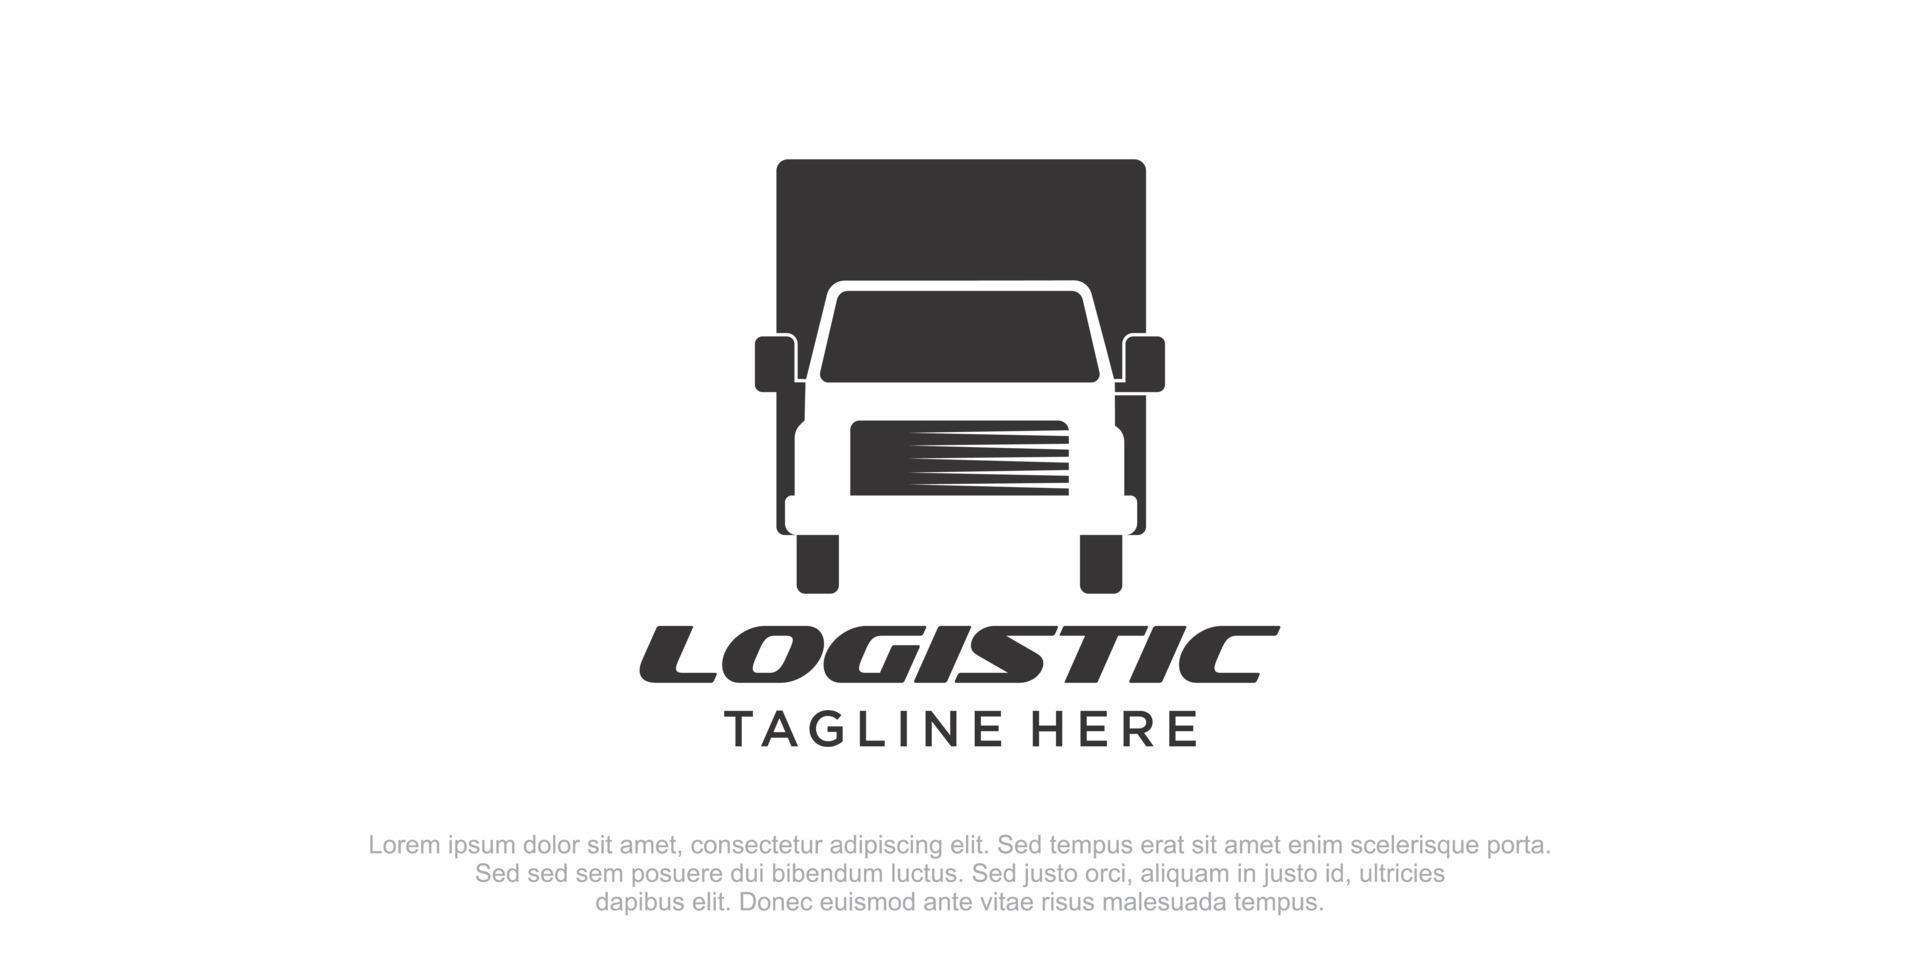 transporte de design de caminhão logístico de logotipo comercial, ideia de modelo de empresa de entrega de carga expressa vetor